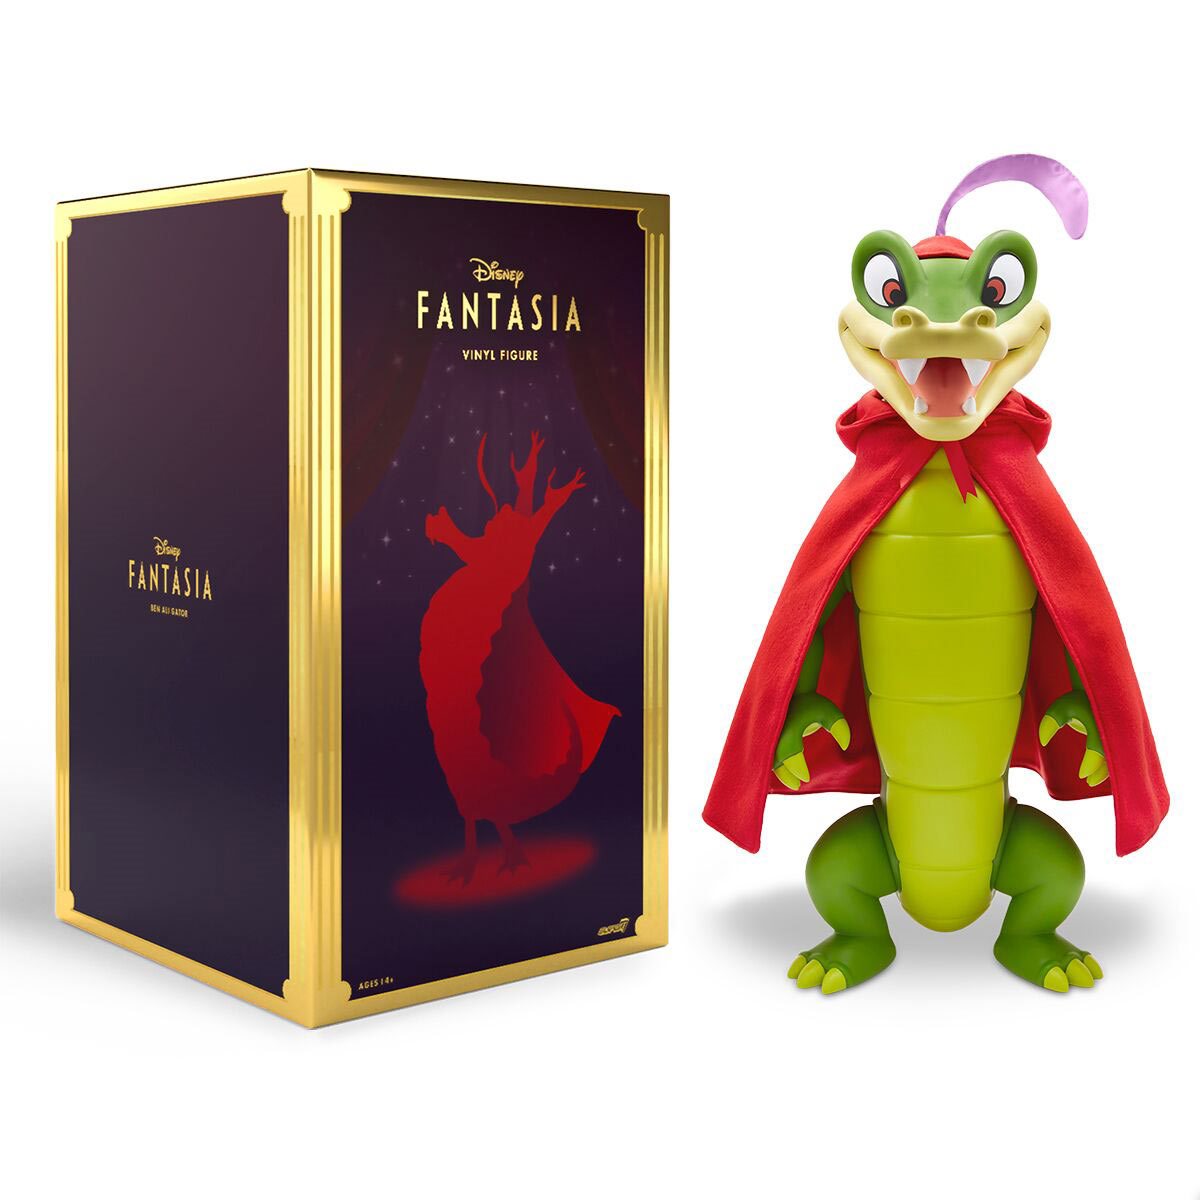 Fantasia Sorcerer Mickey Mouse Funko Rewind Vinyl Figure